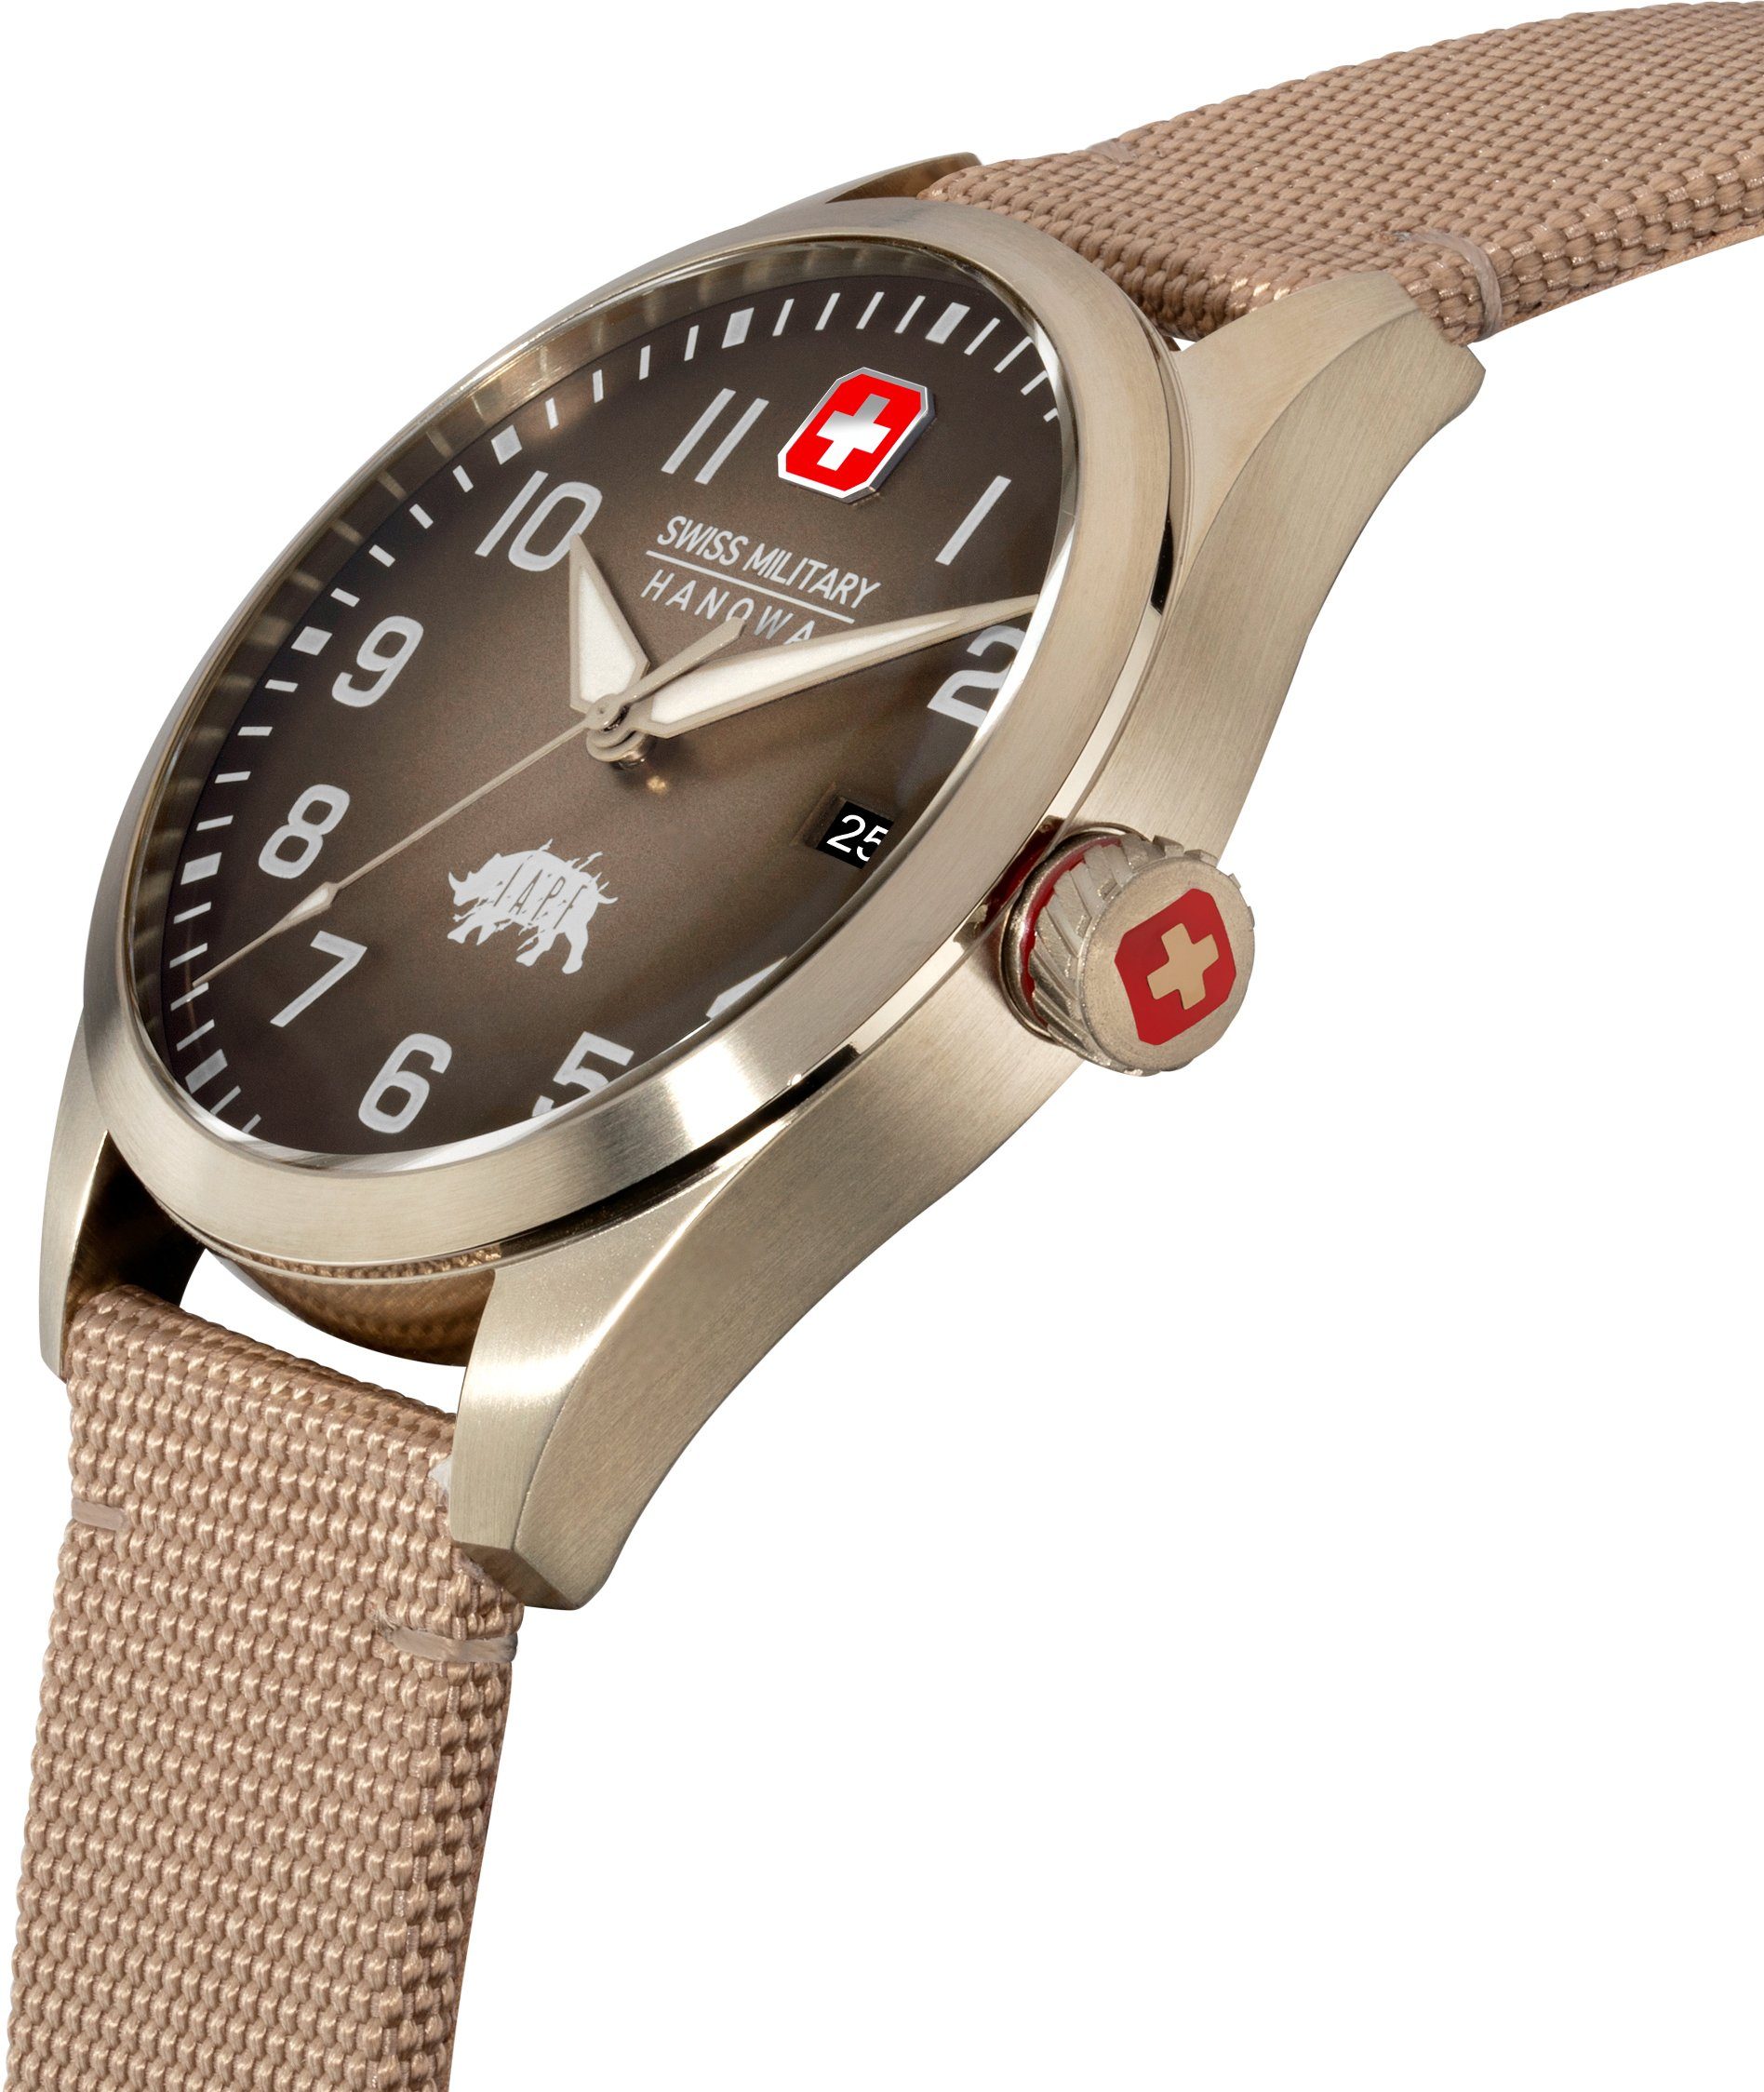 Uhr BUSHMASTER, SMWGN2102310 Military Swiss Hanowa Schweizer